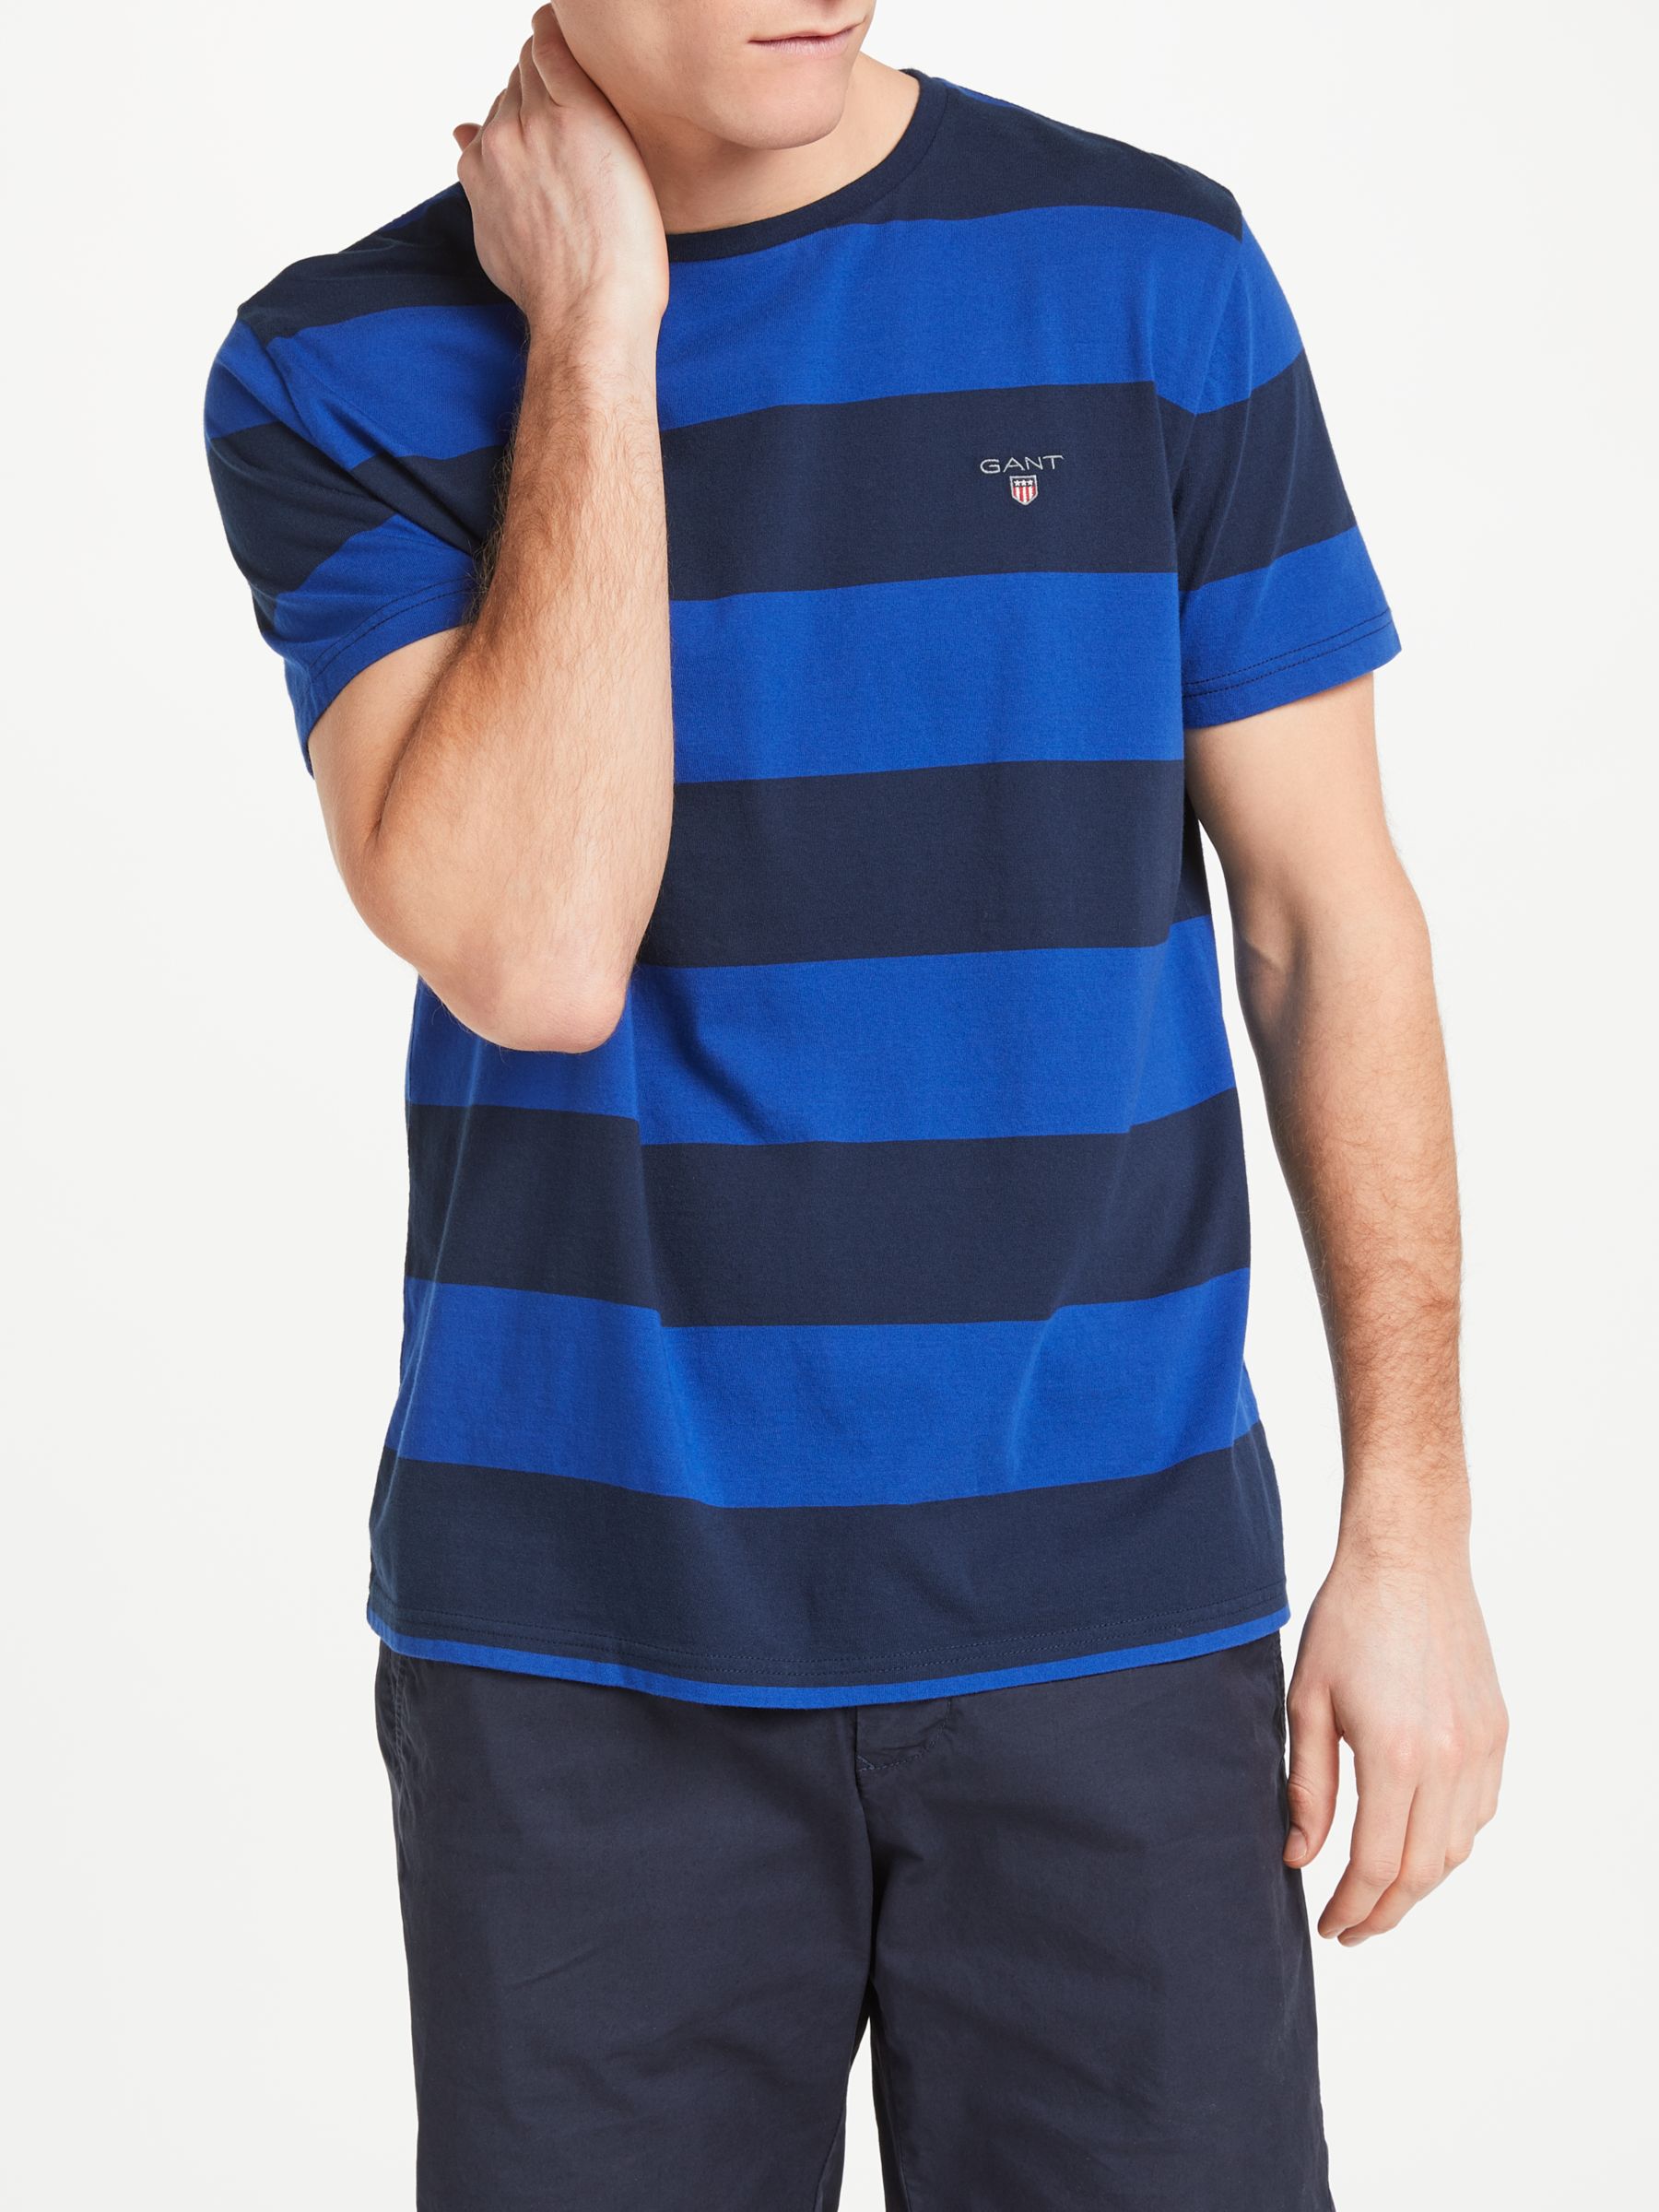 GANT Original Barstripe Cotton T-Shirt, Blue, L